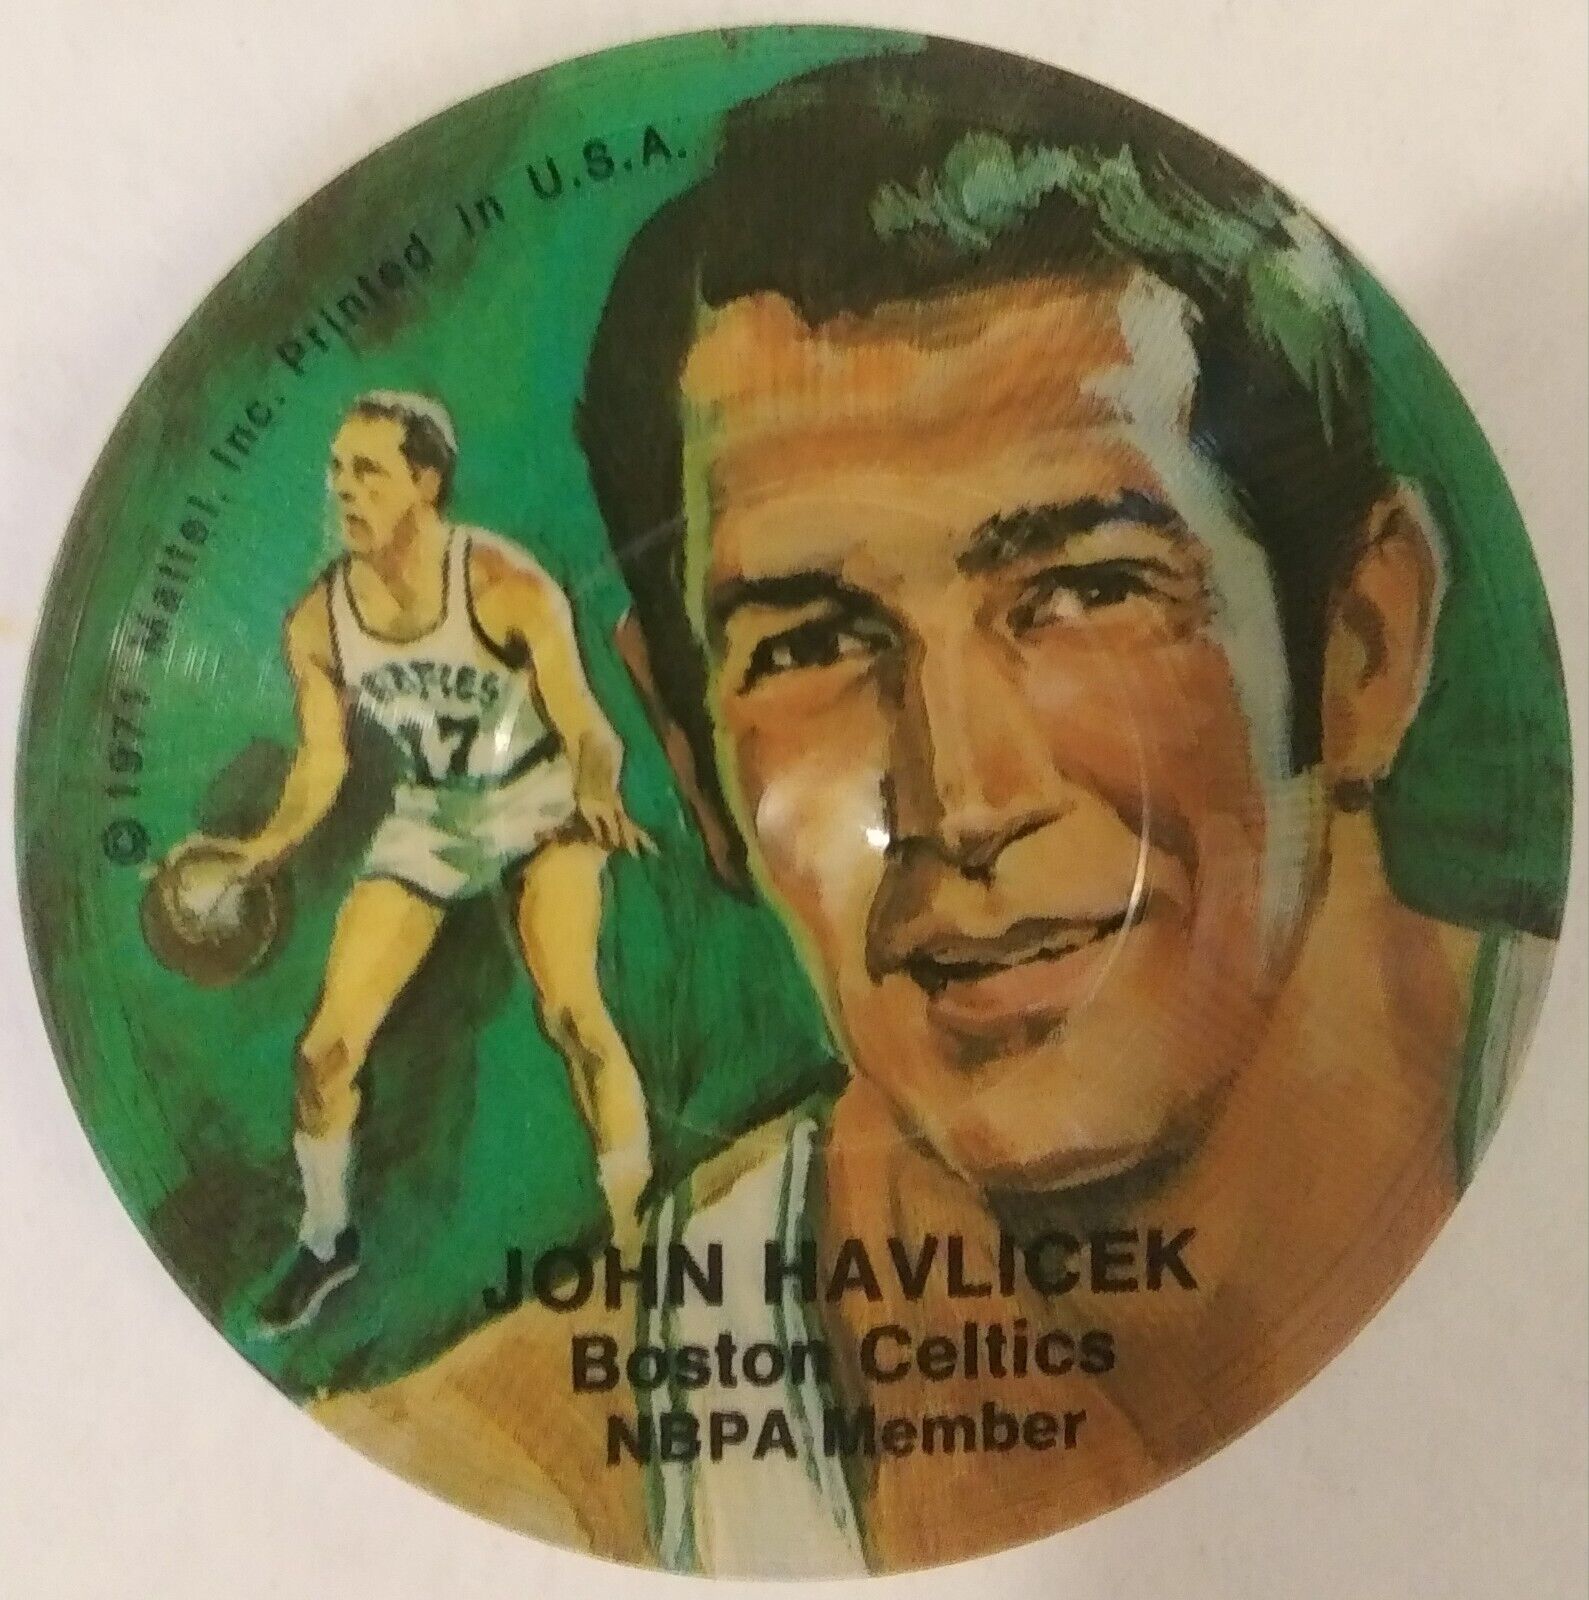 1971 Mattel Instant Replay JOHN HAVLICEK Double-Sided Mini Record - UNPLAYED